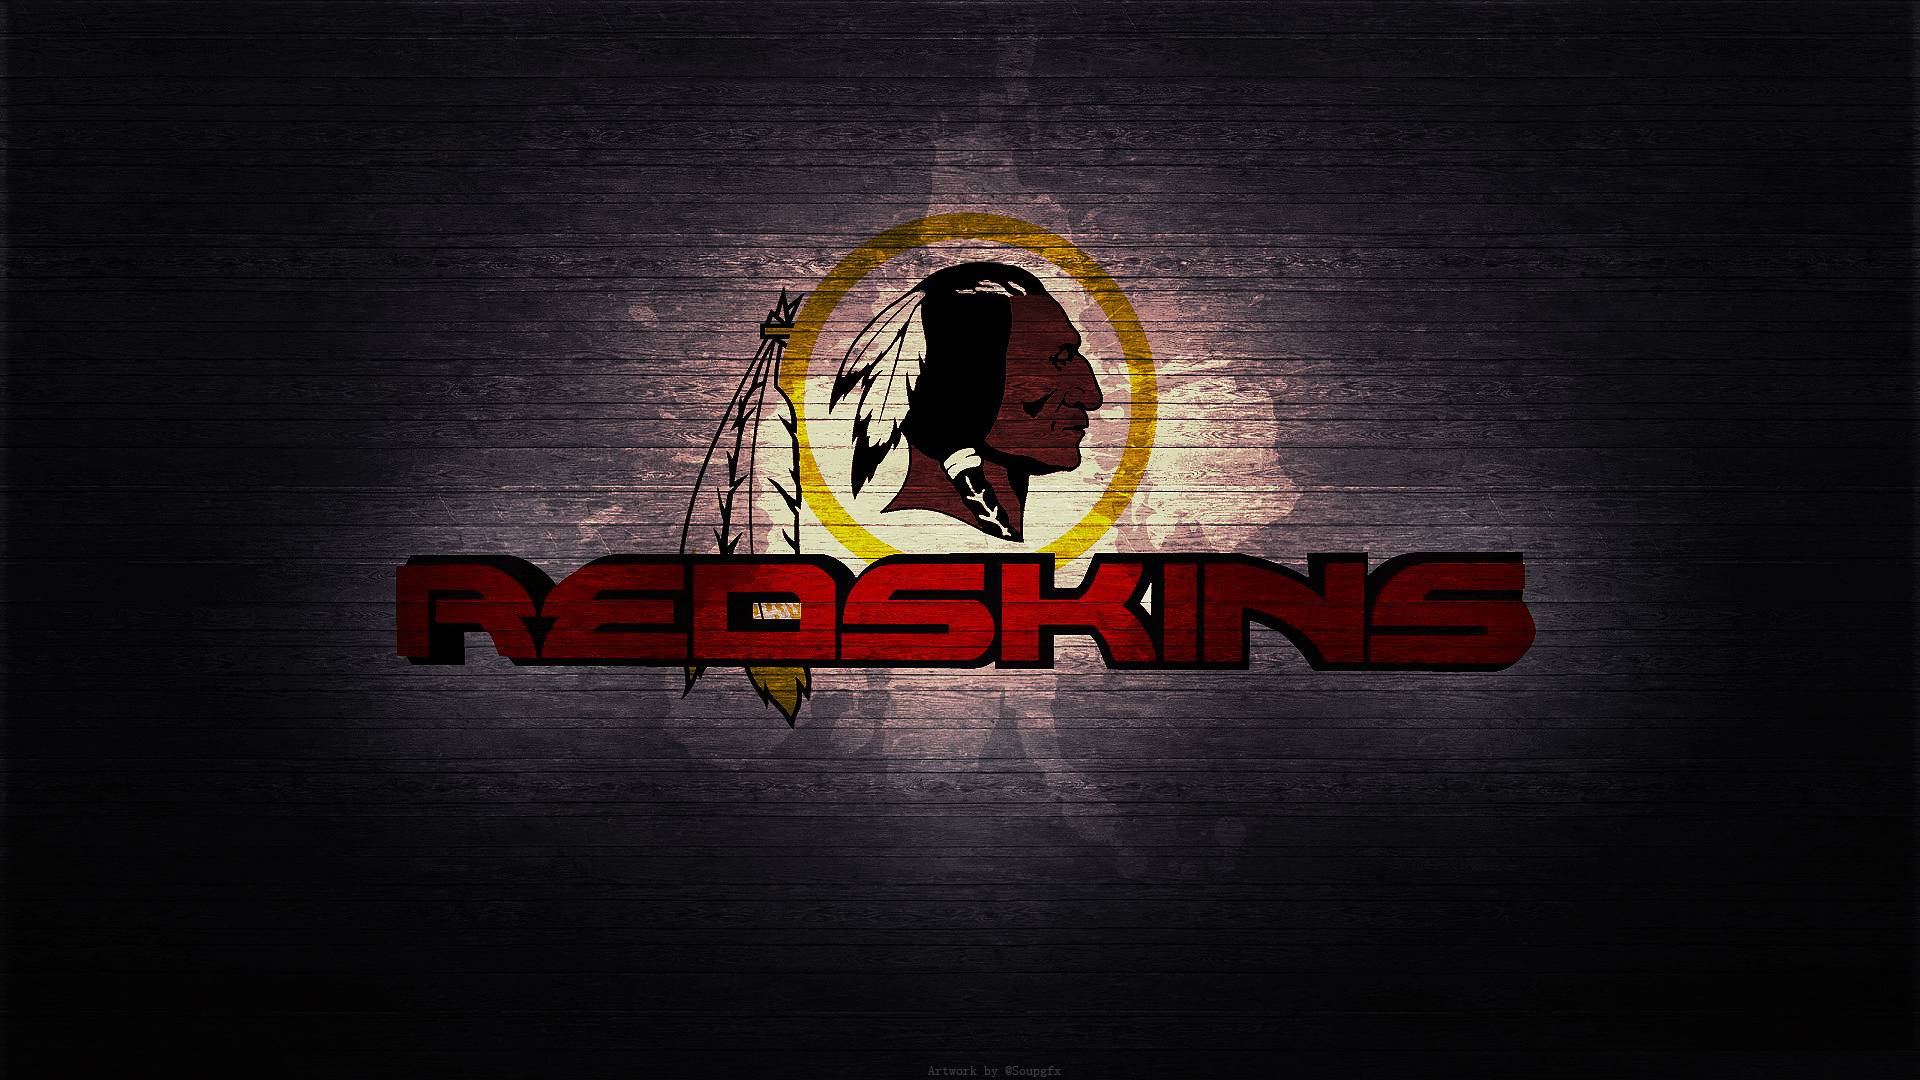 Washington Redskins Best Wallpaper 35506 Hi Resolution. Best Free JPG